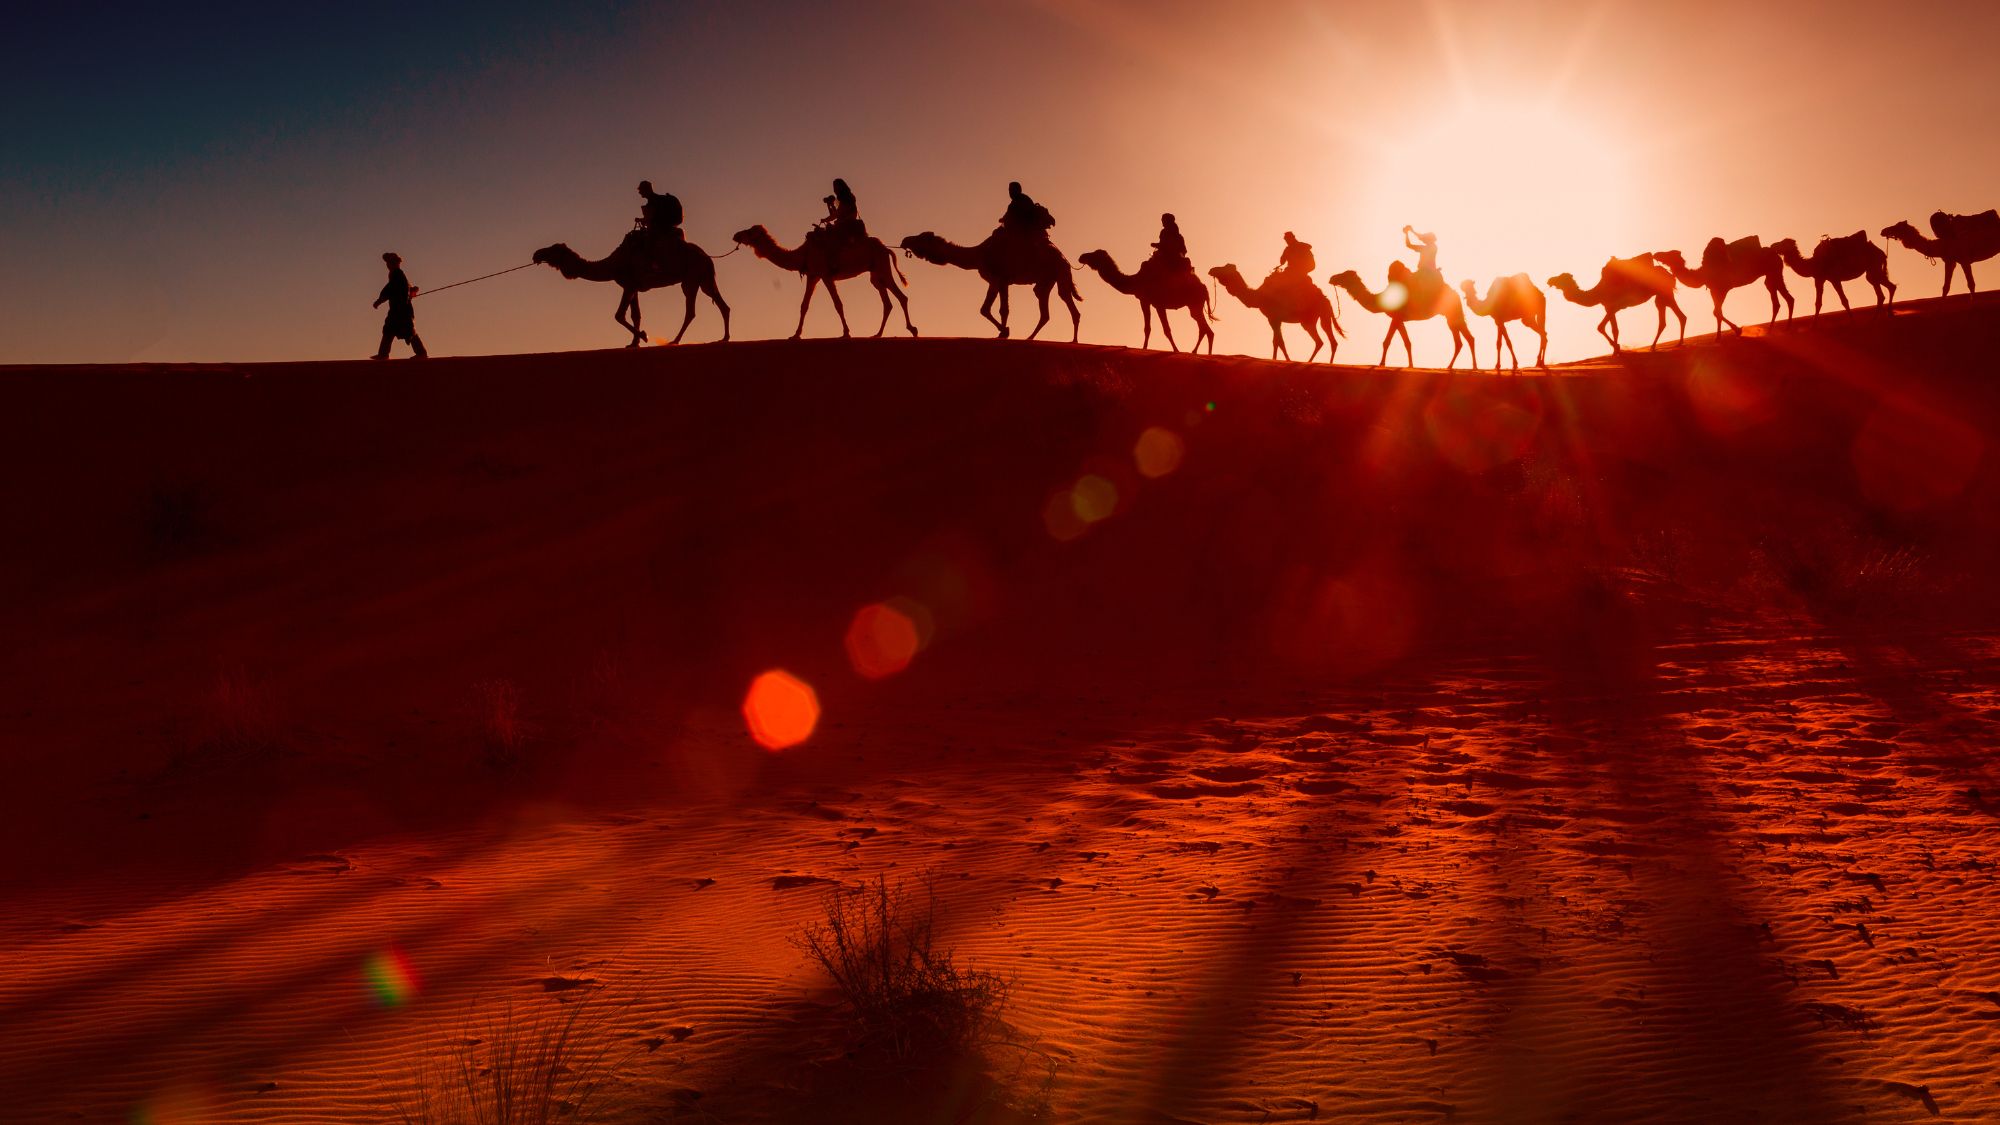 Travelers on camels exploring the Saudi Arabian desert.